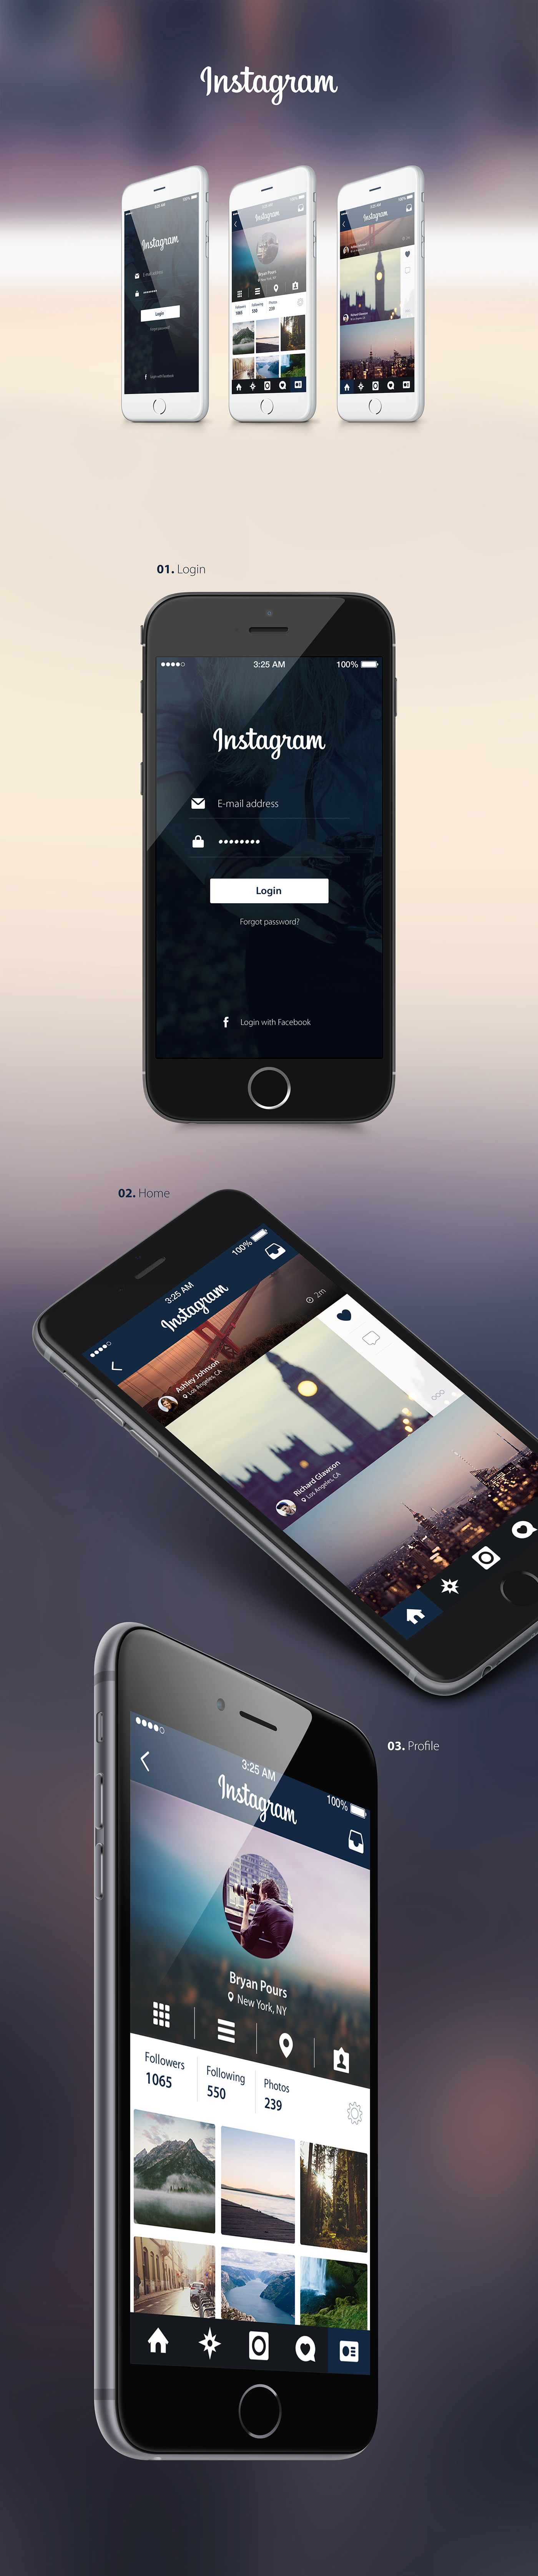 social instagram redesign ux UI Interface app mobile smartphone iphone apple free Mockup